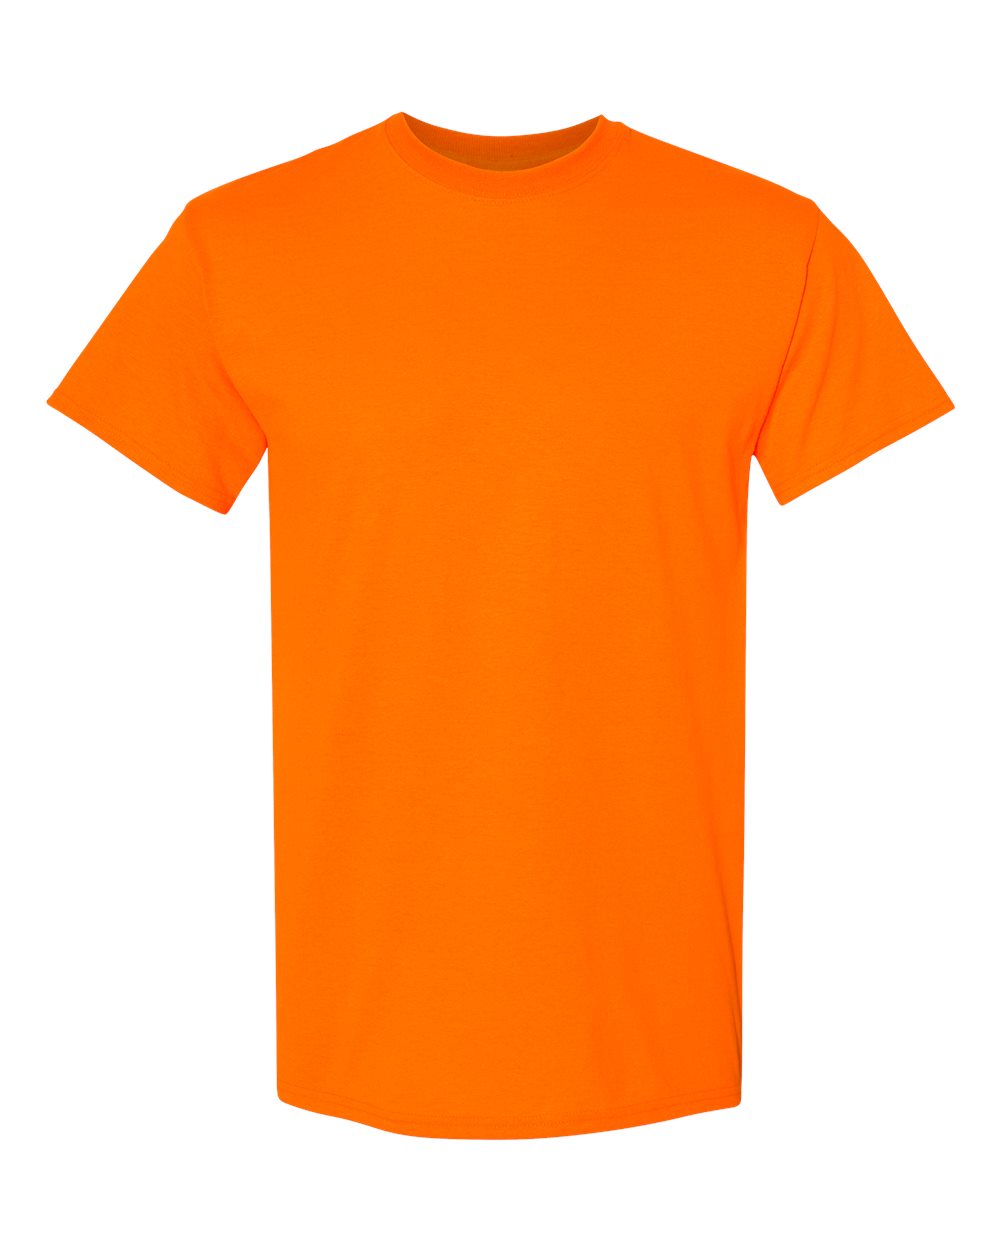 Pretreated Gildan 5000 Heavy Cotton T-Shirt - Safety Orange